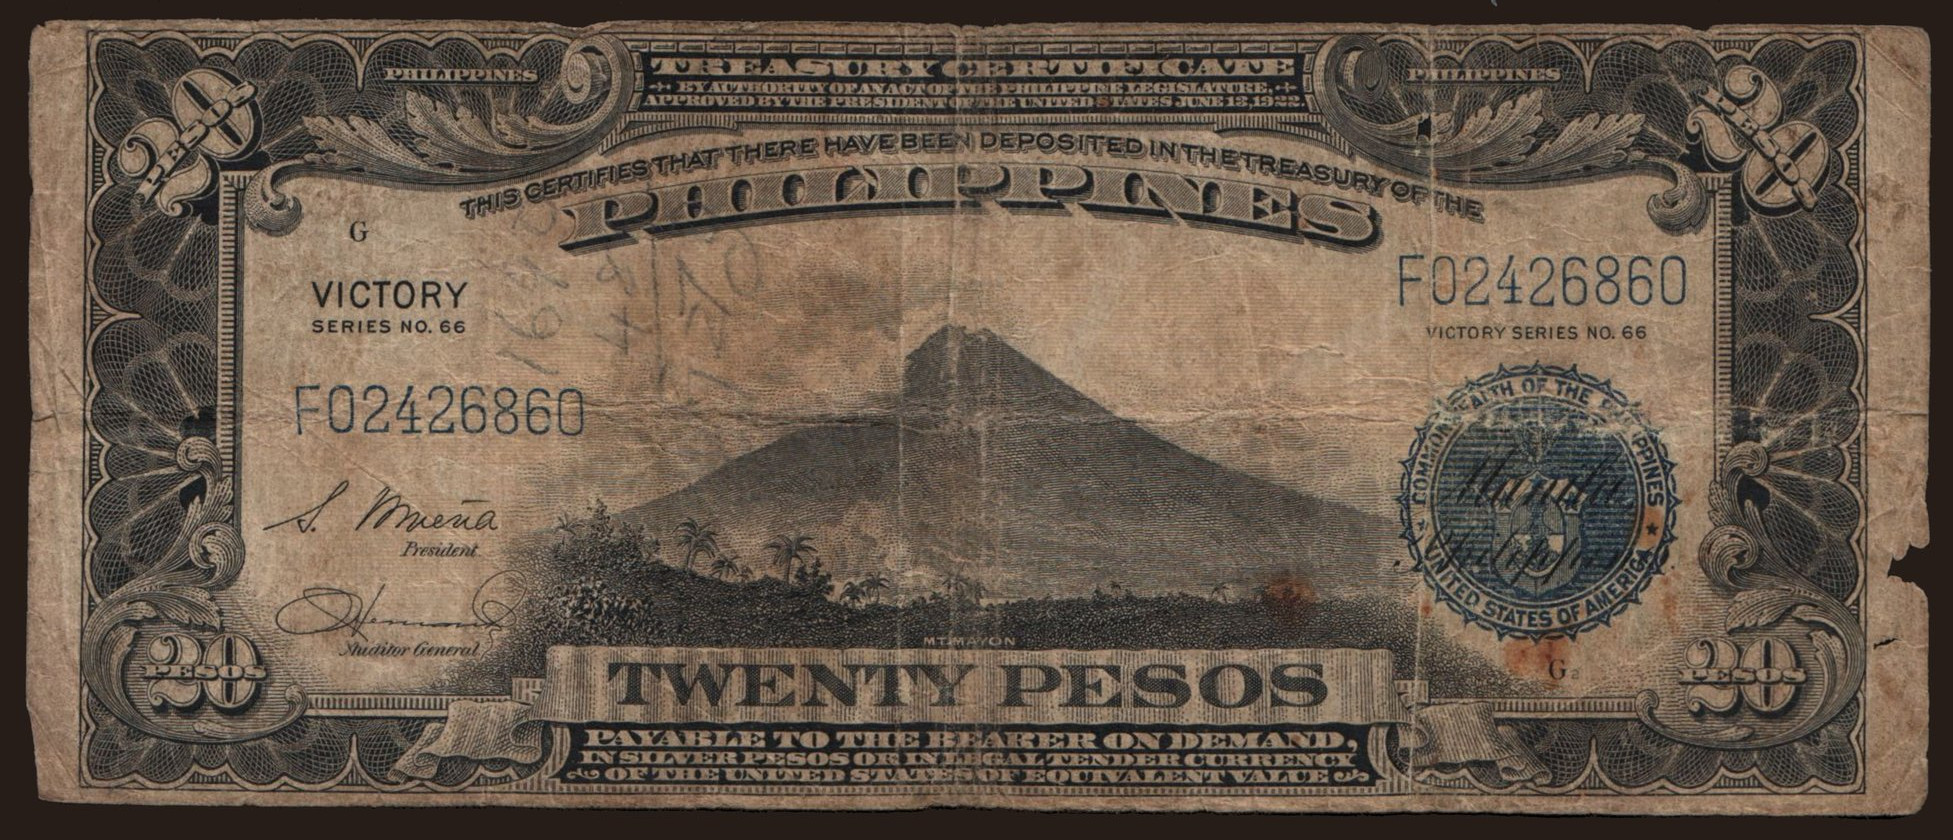 20 pesos, 1944